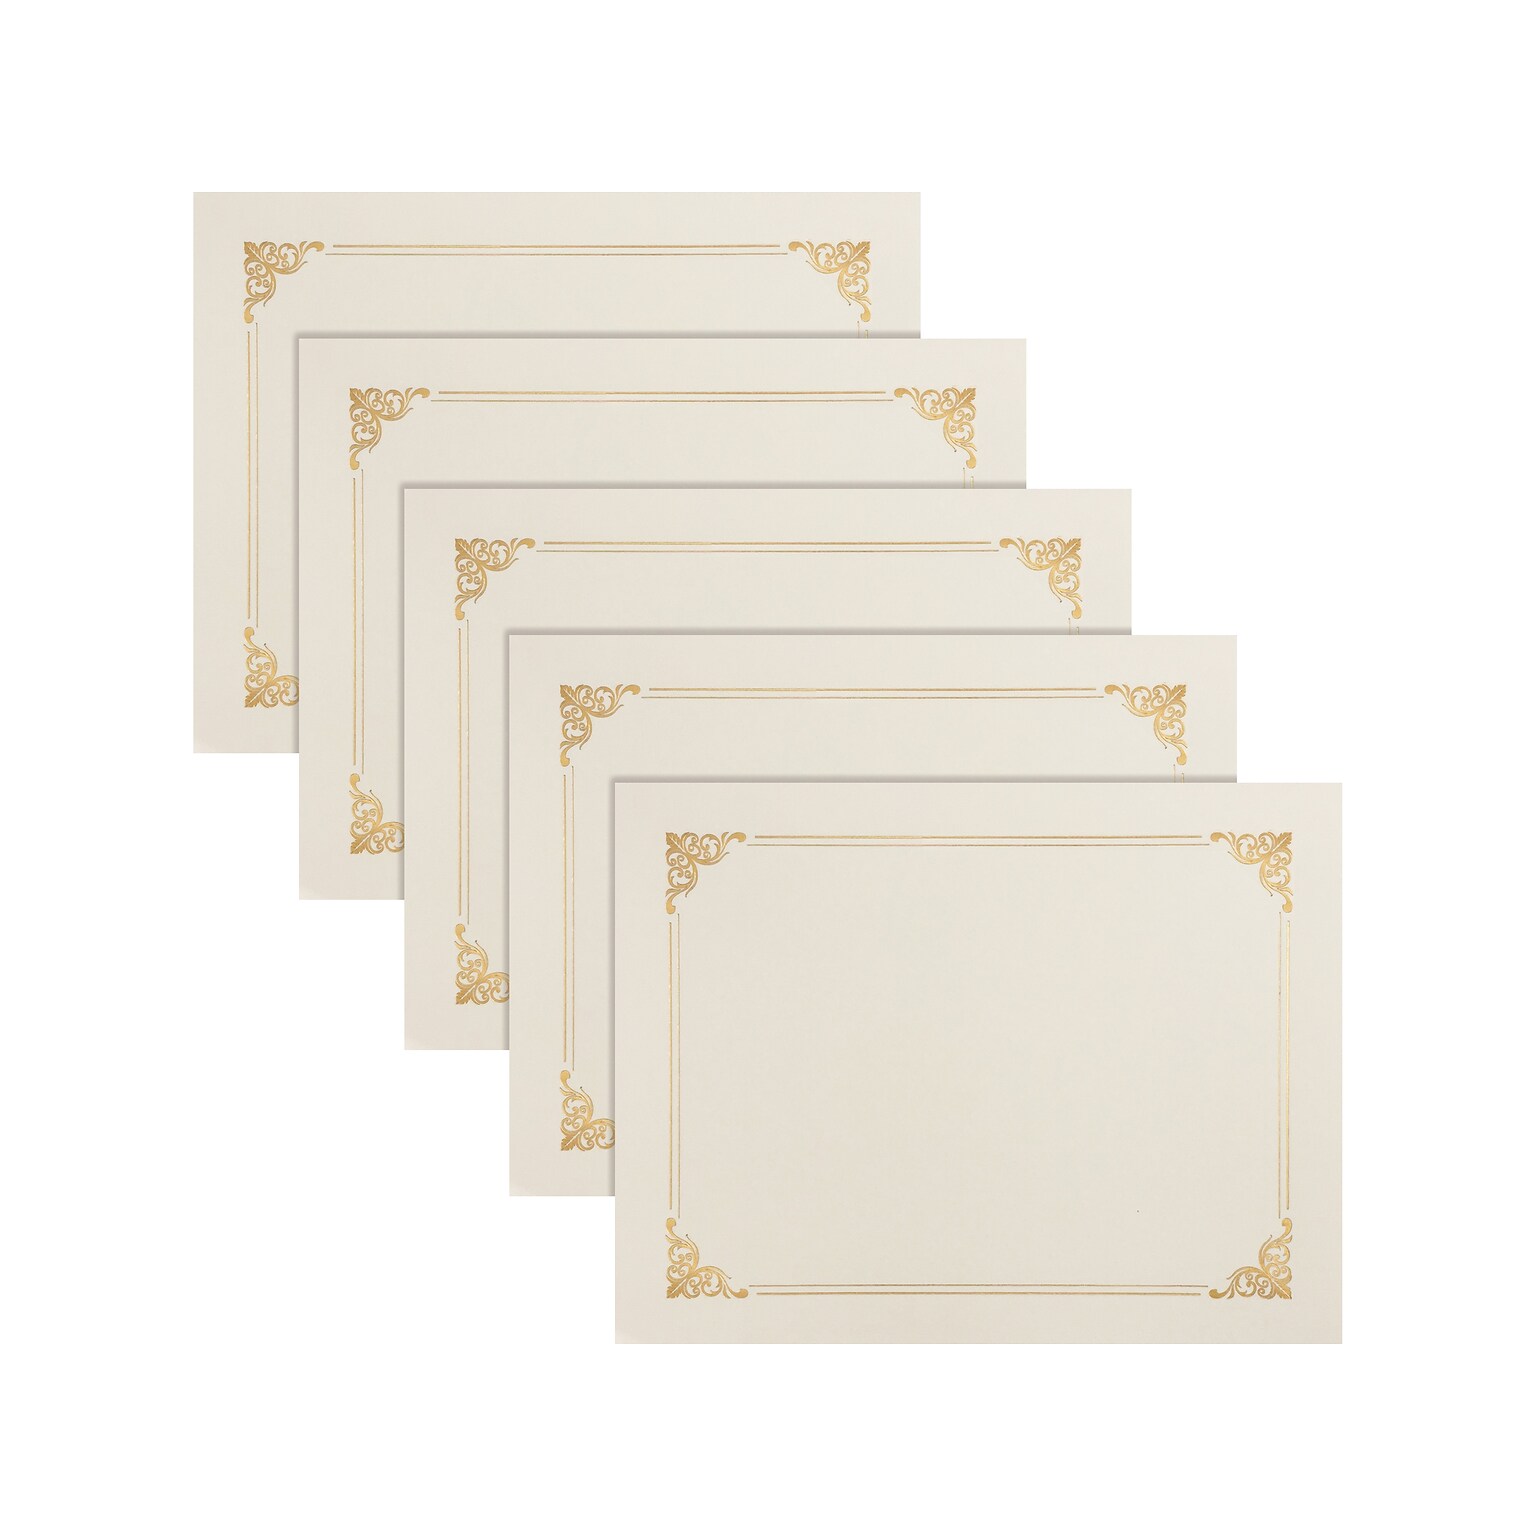 Better Office Certificate Holders, 8.75 x 11.25, Ivory/Gold, 25/Pack (65250-25PK)